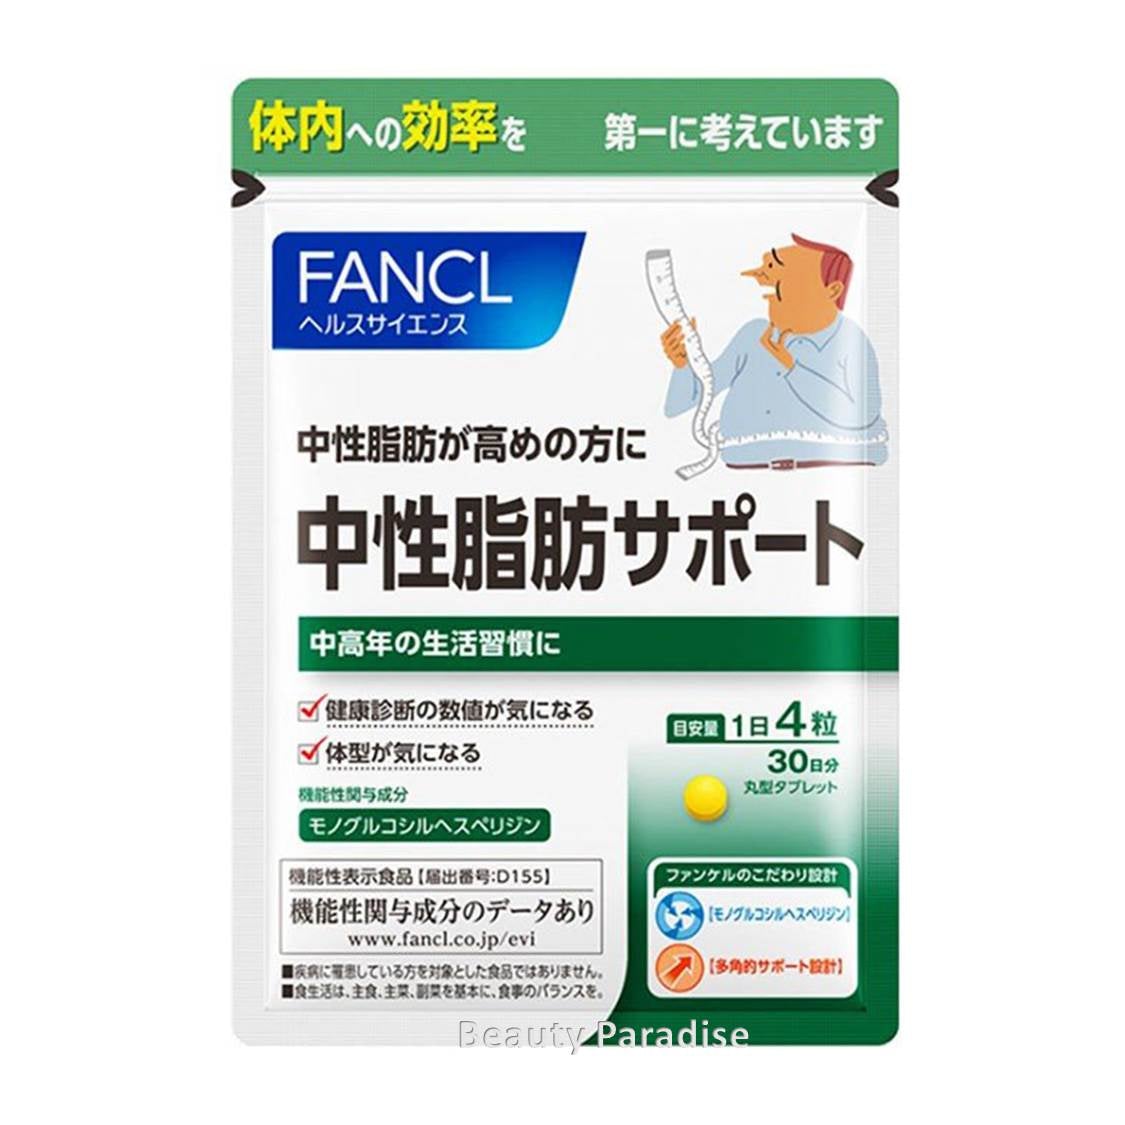 fancl-health-lipid-support